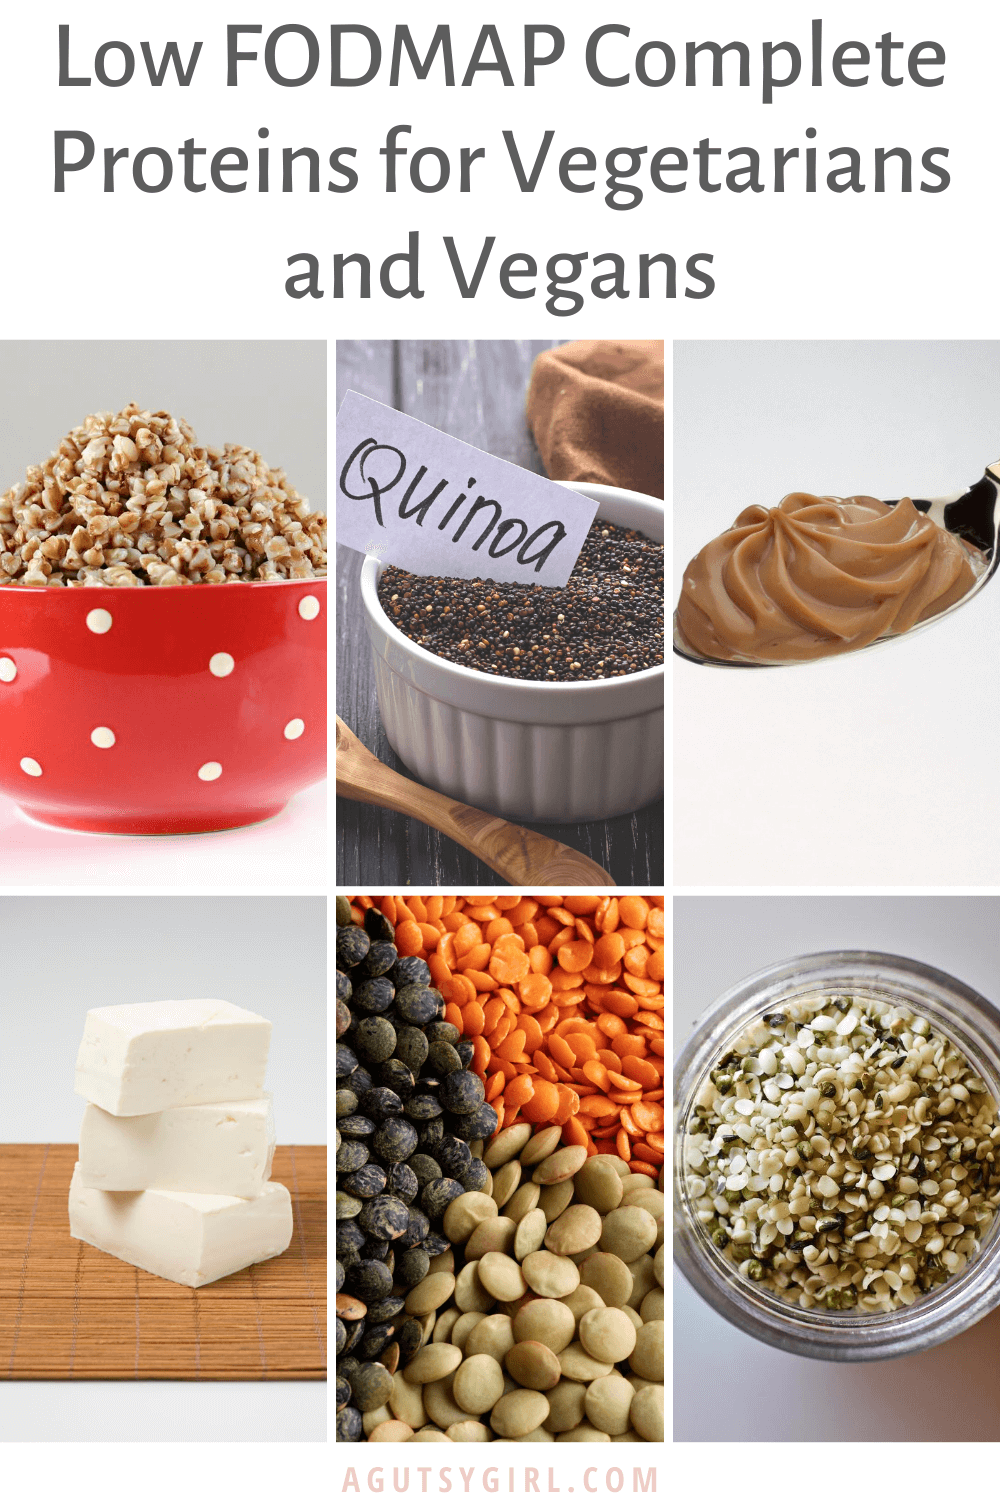 6 Low FODMAP Complete Proteins for Vegetarians and Vegans agutsygirl.com #lowfodmap #sibo #vegan